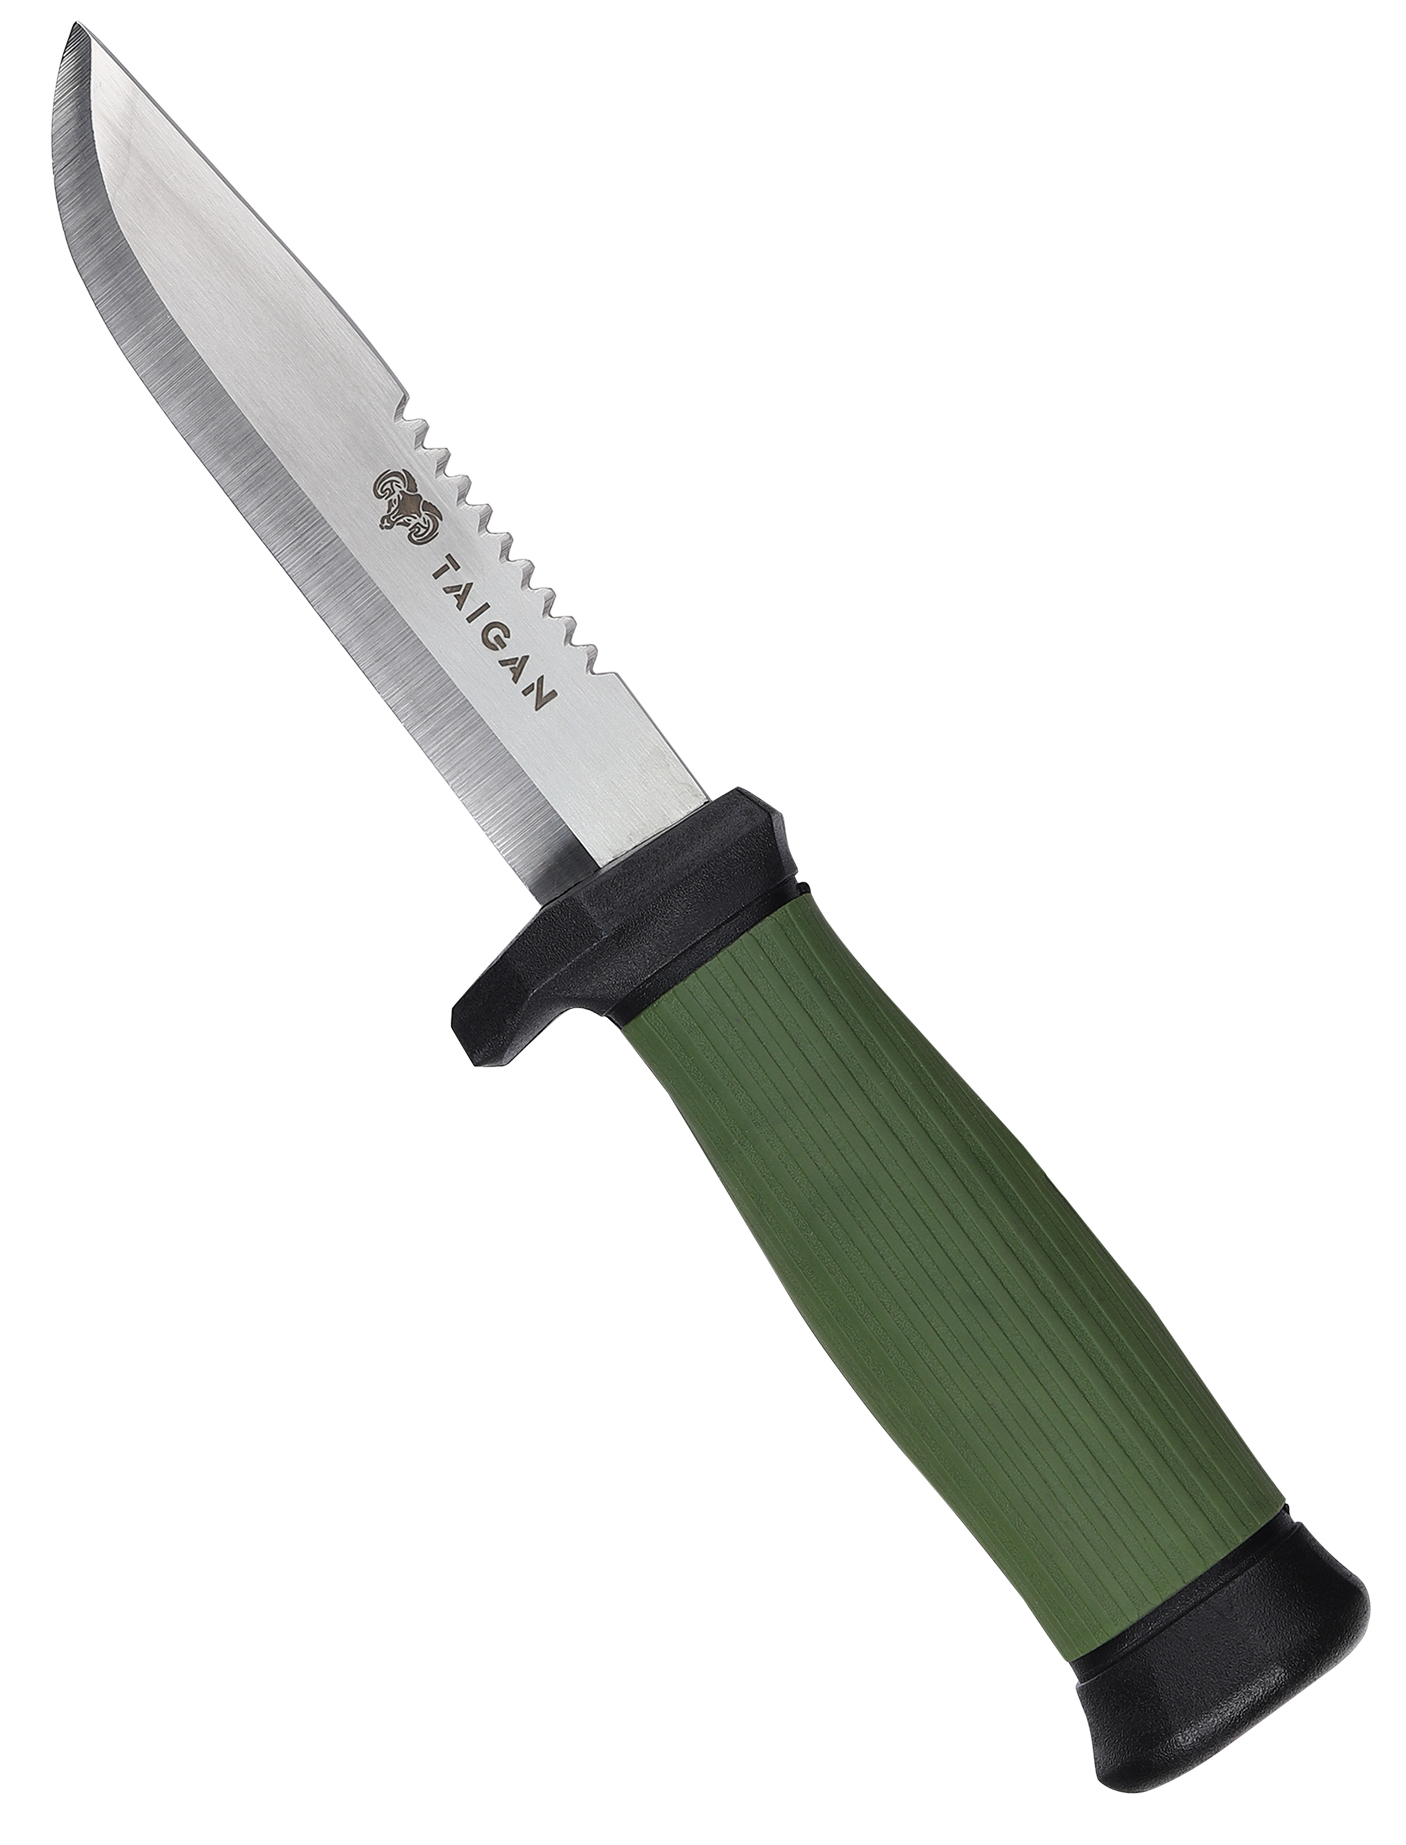 Нож Taigan Snipe сталь 4Cr14 рукоять TPR+PP - фото 1